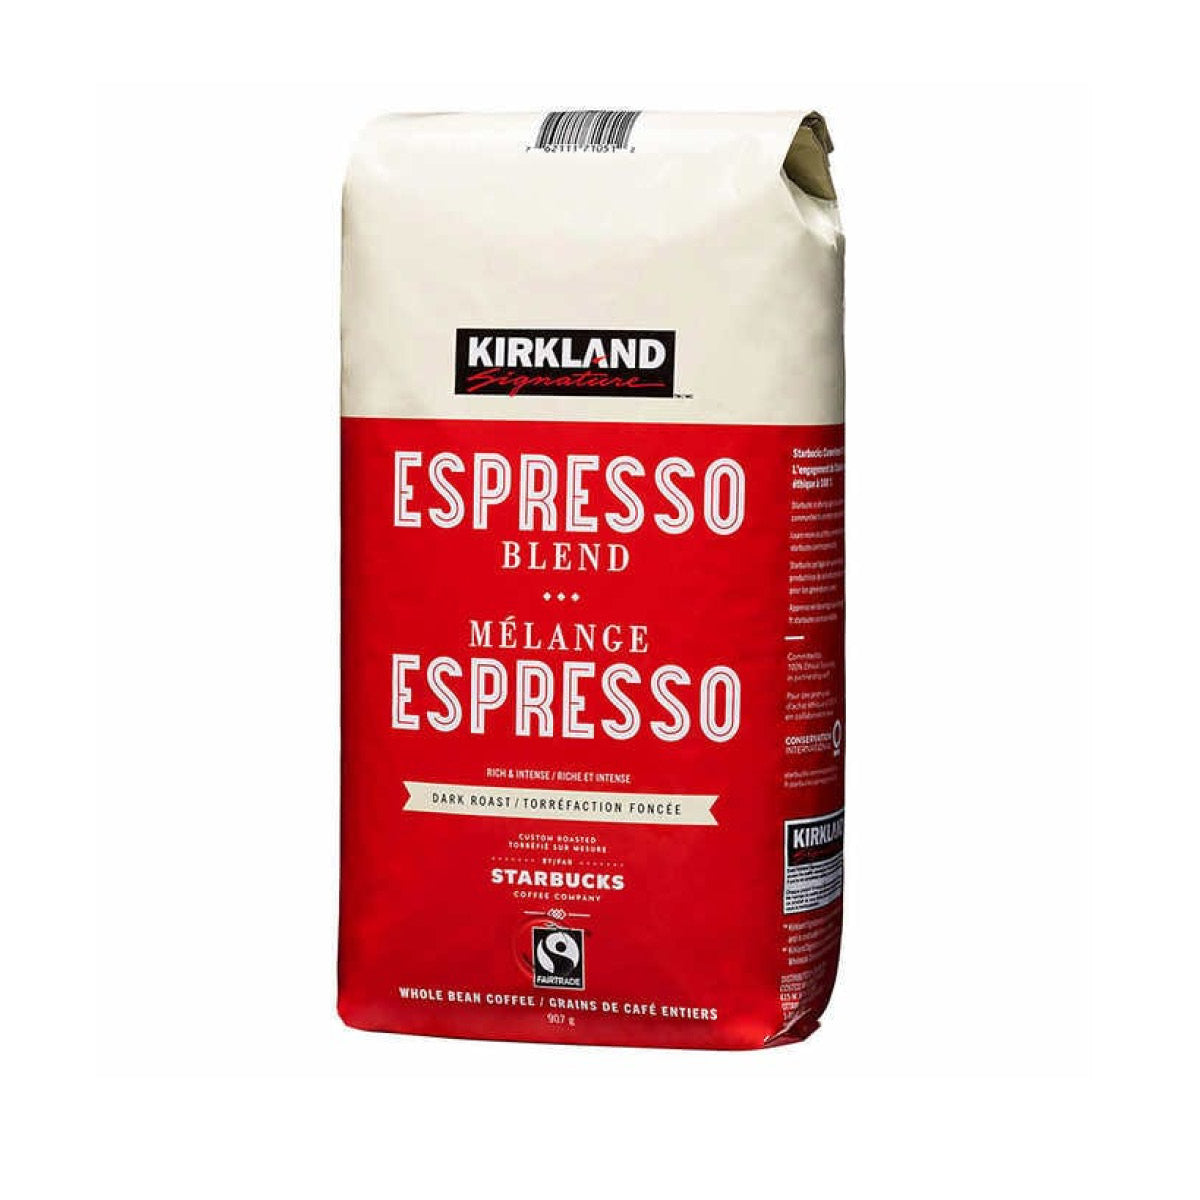 Kirkland Espresso Blend, Whole Bean Coffee, 907g